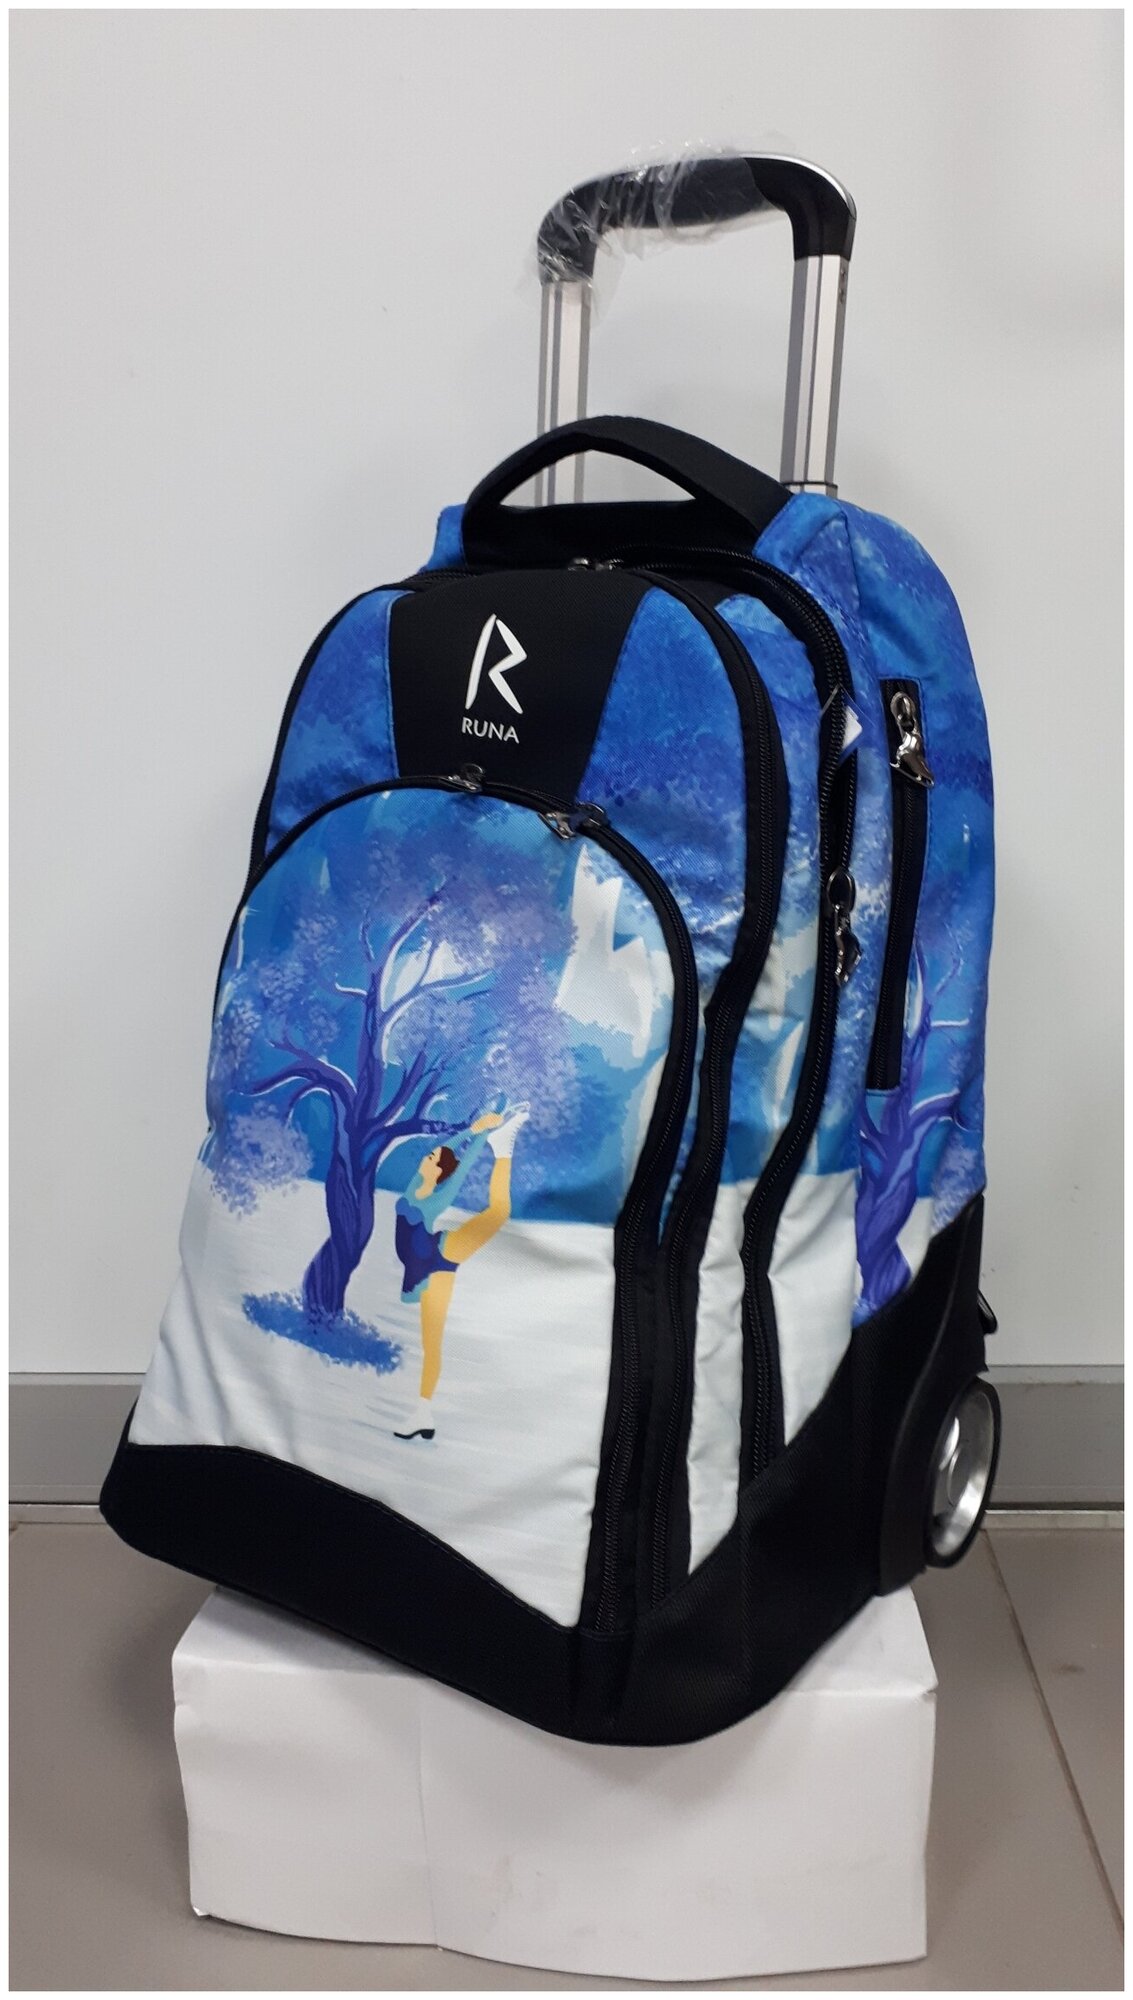 Сумка-рюкзак на колесиках "RUNA", Зимний сад Blue - фотография № 3